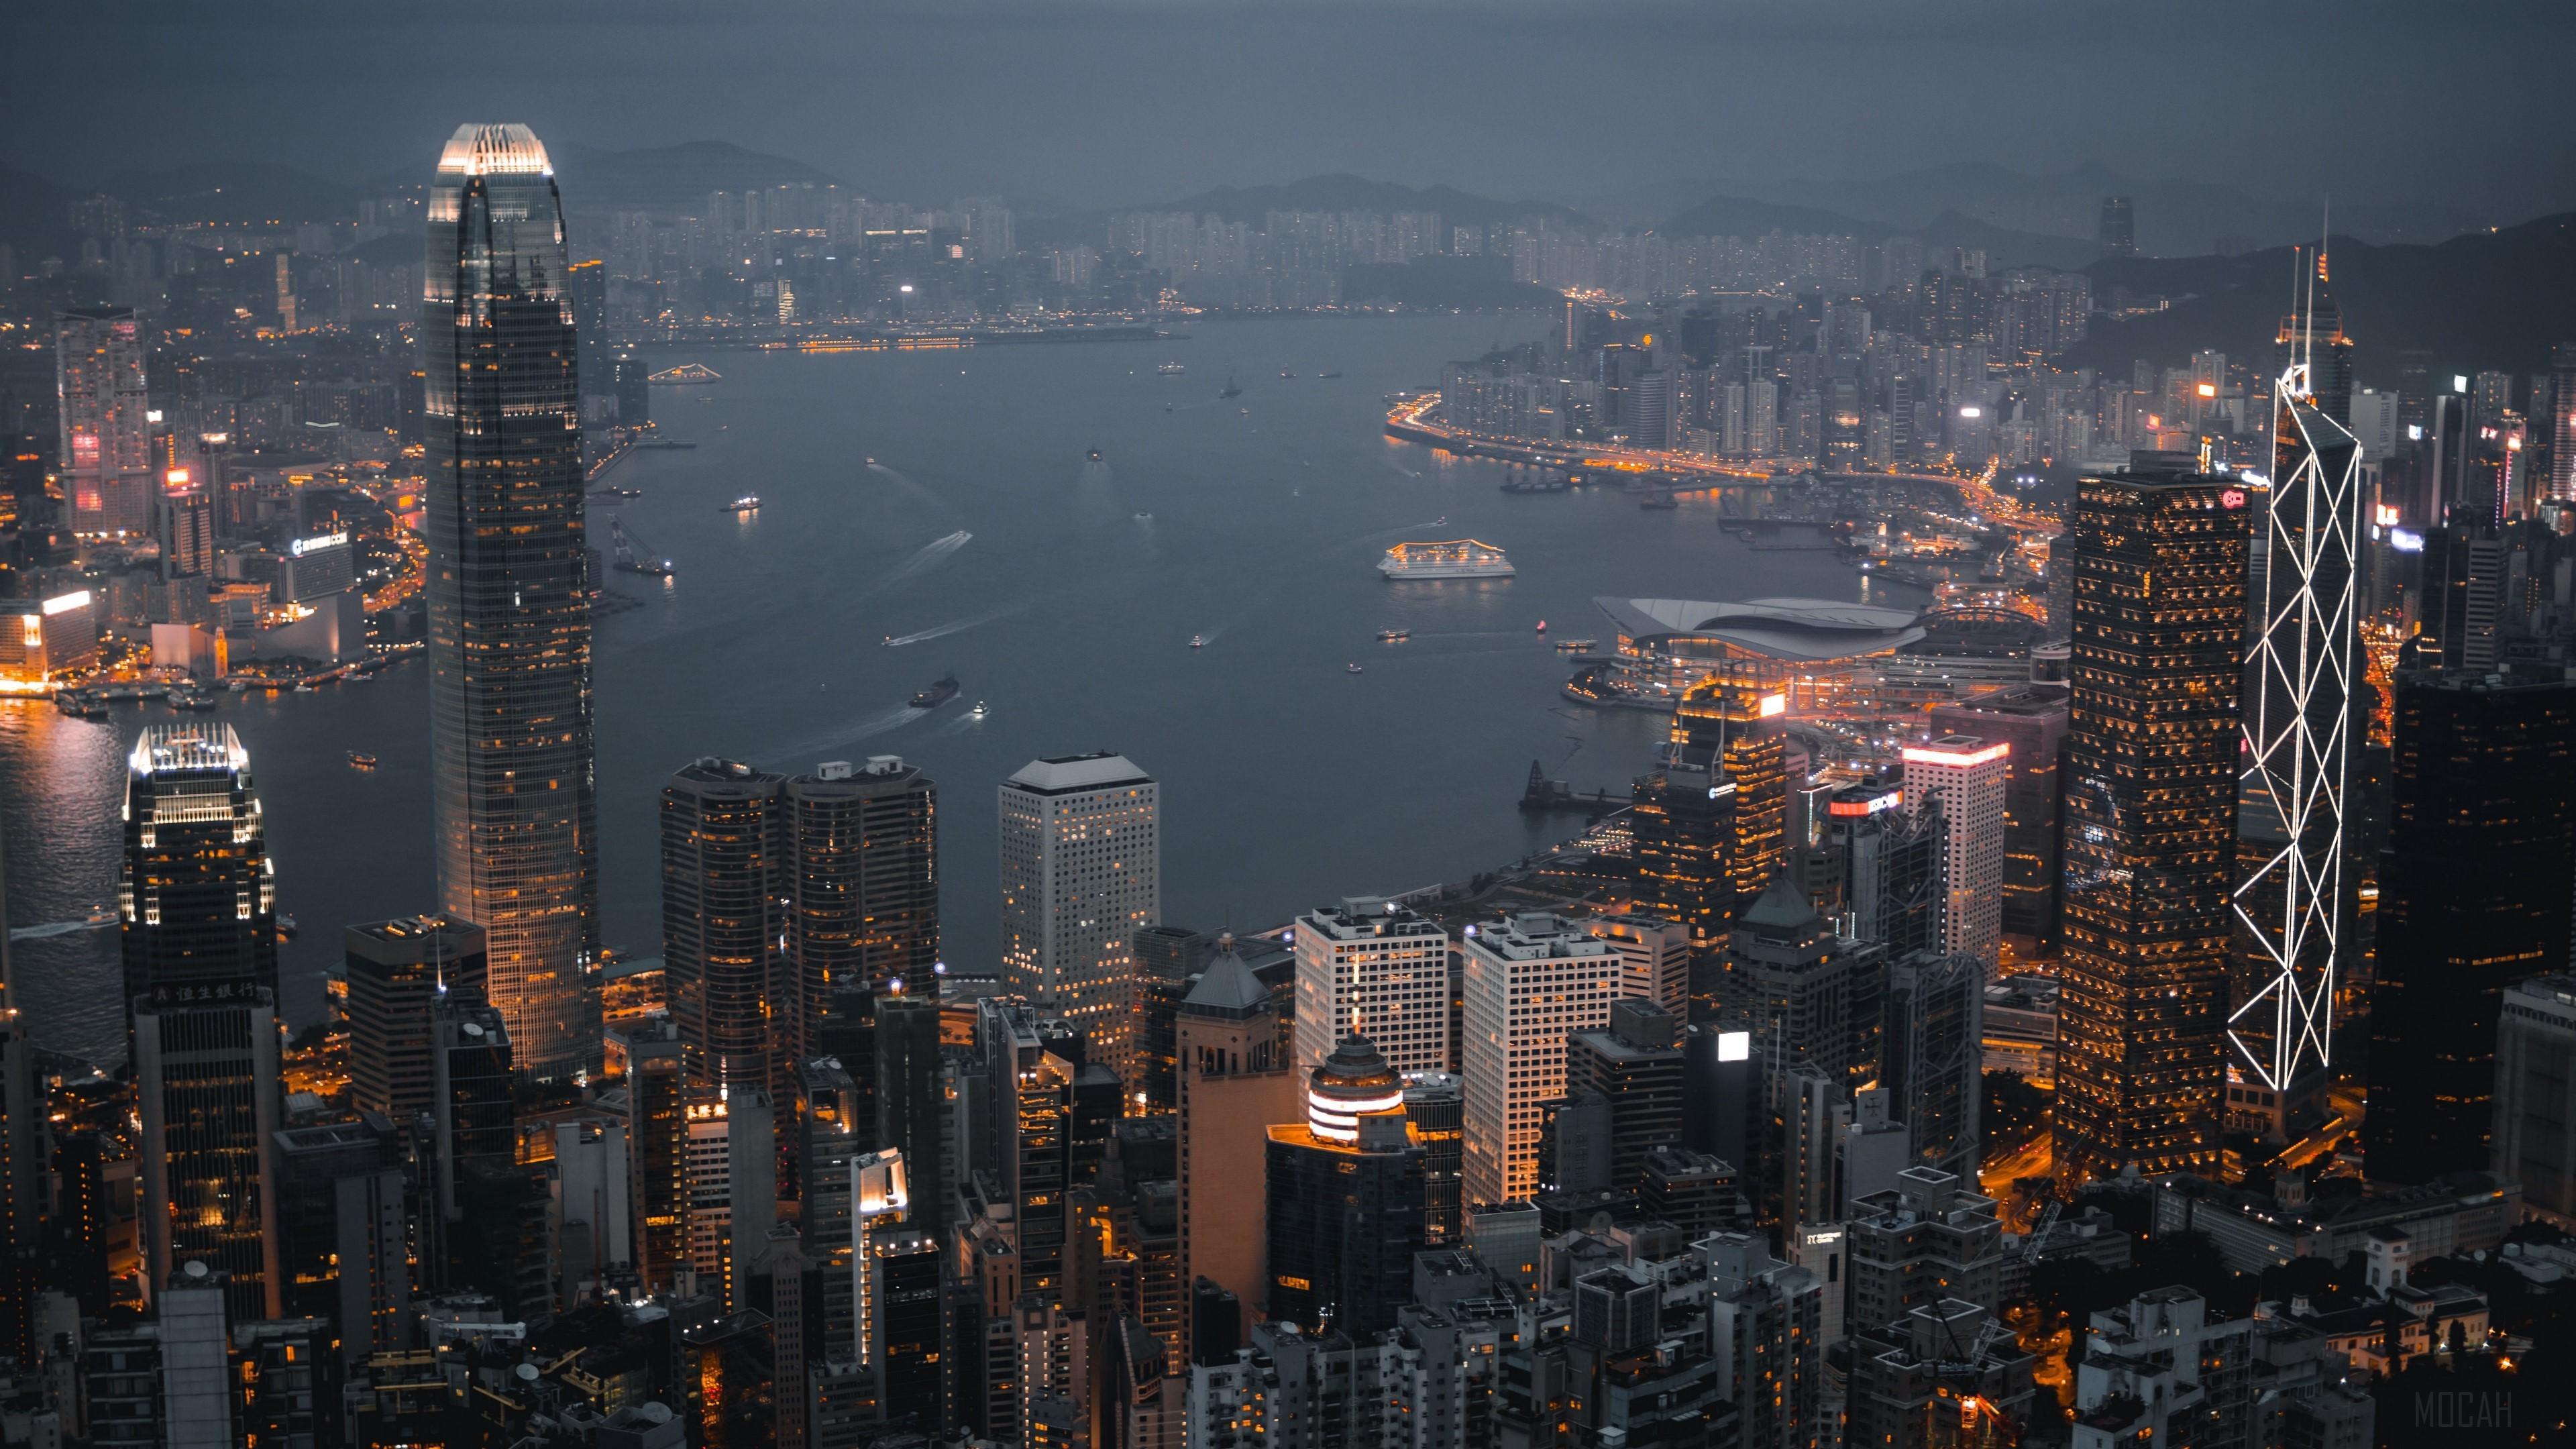 HD wallpaper, City Lights, Skyscrapers, Night City, Hong Kong 4K